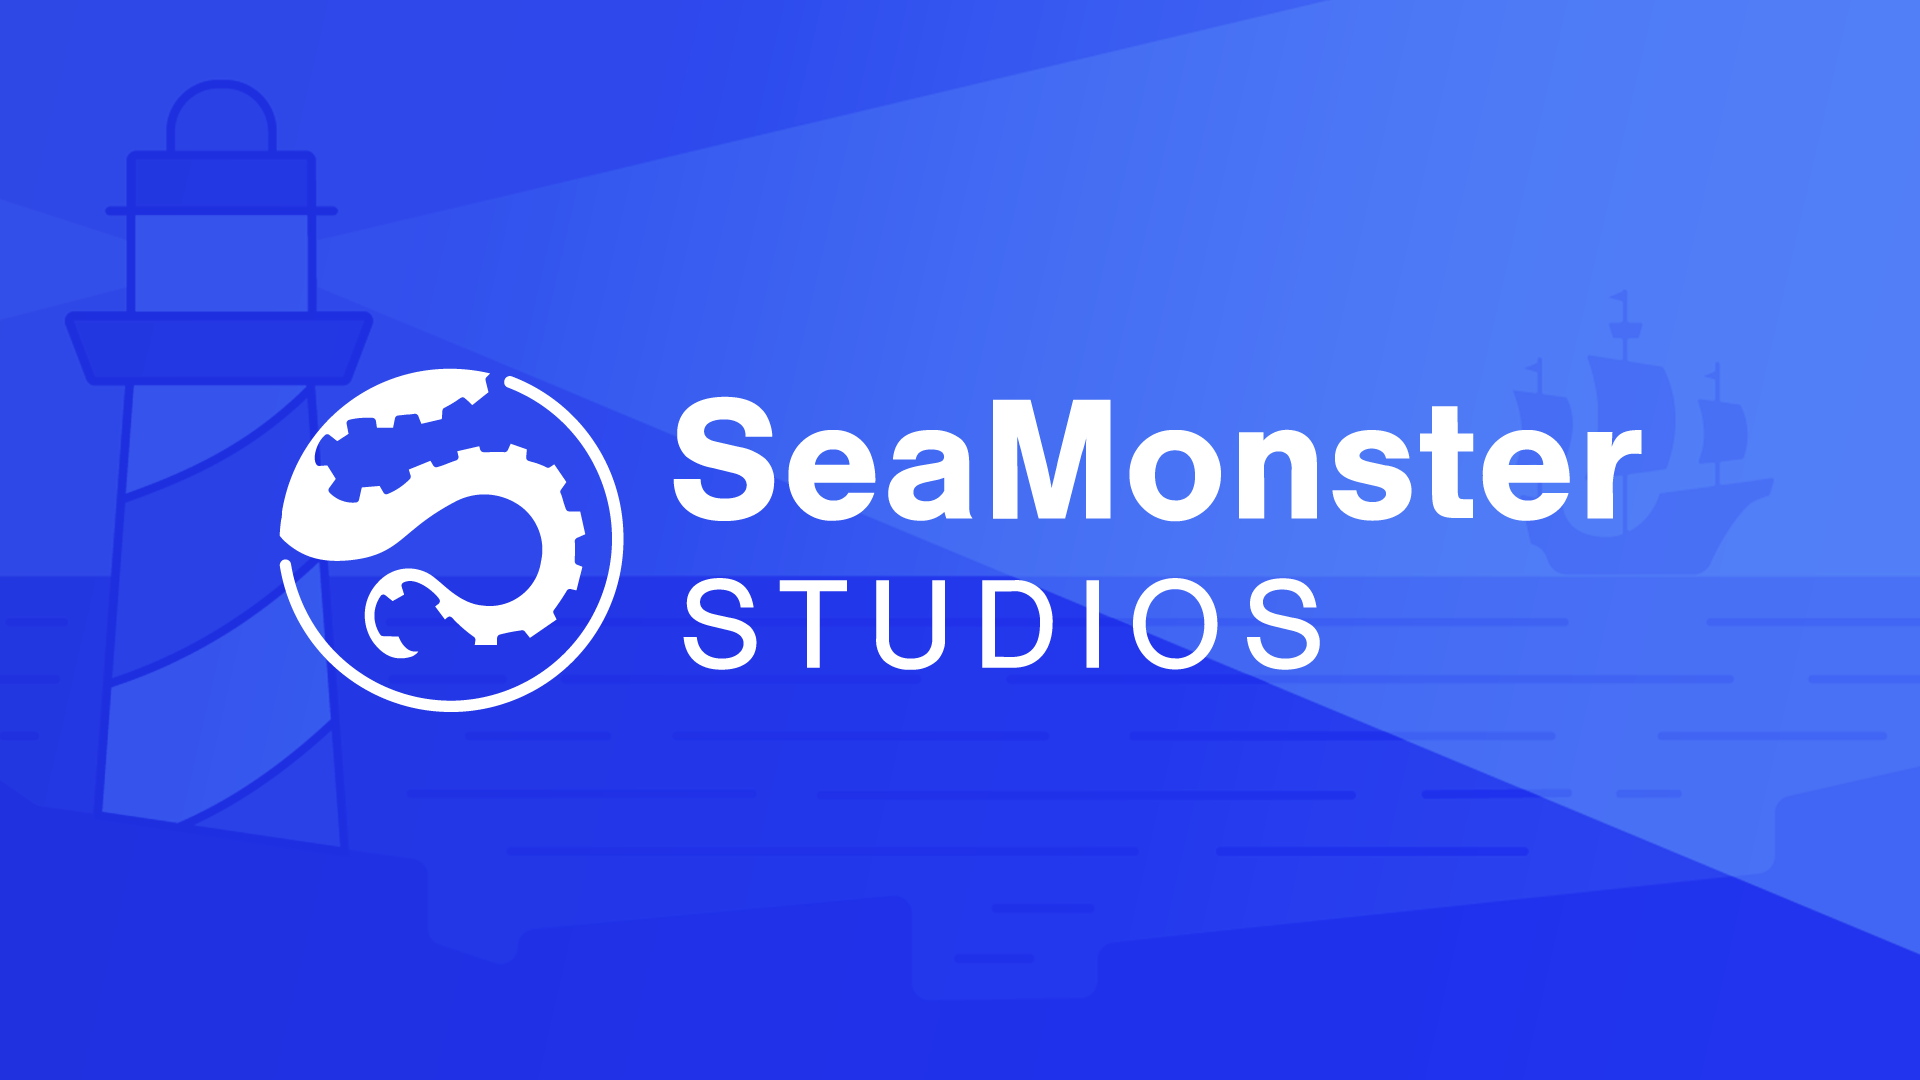 SeaMonster studios logo